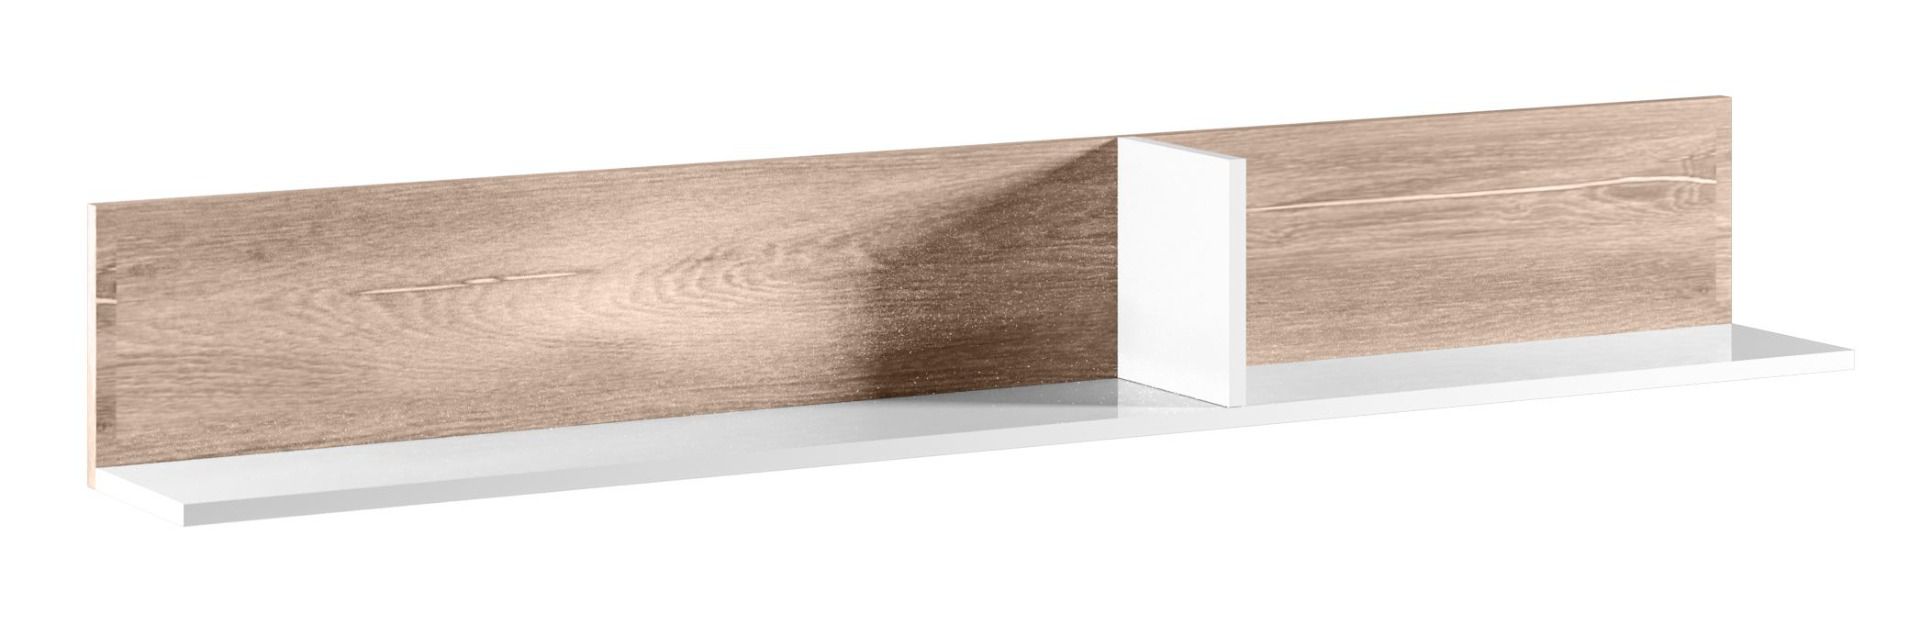 Hangplank / wandplank Albondon 06, kleur: eiken / wit glans - Afmetingen: 24 x 173 x 21 cm (H x B x D)